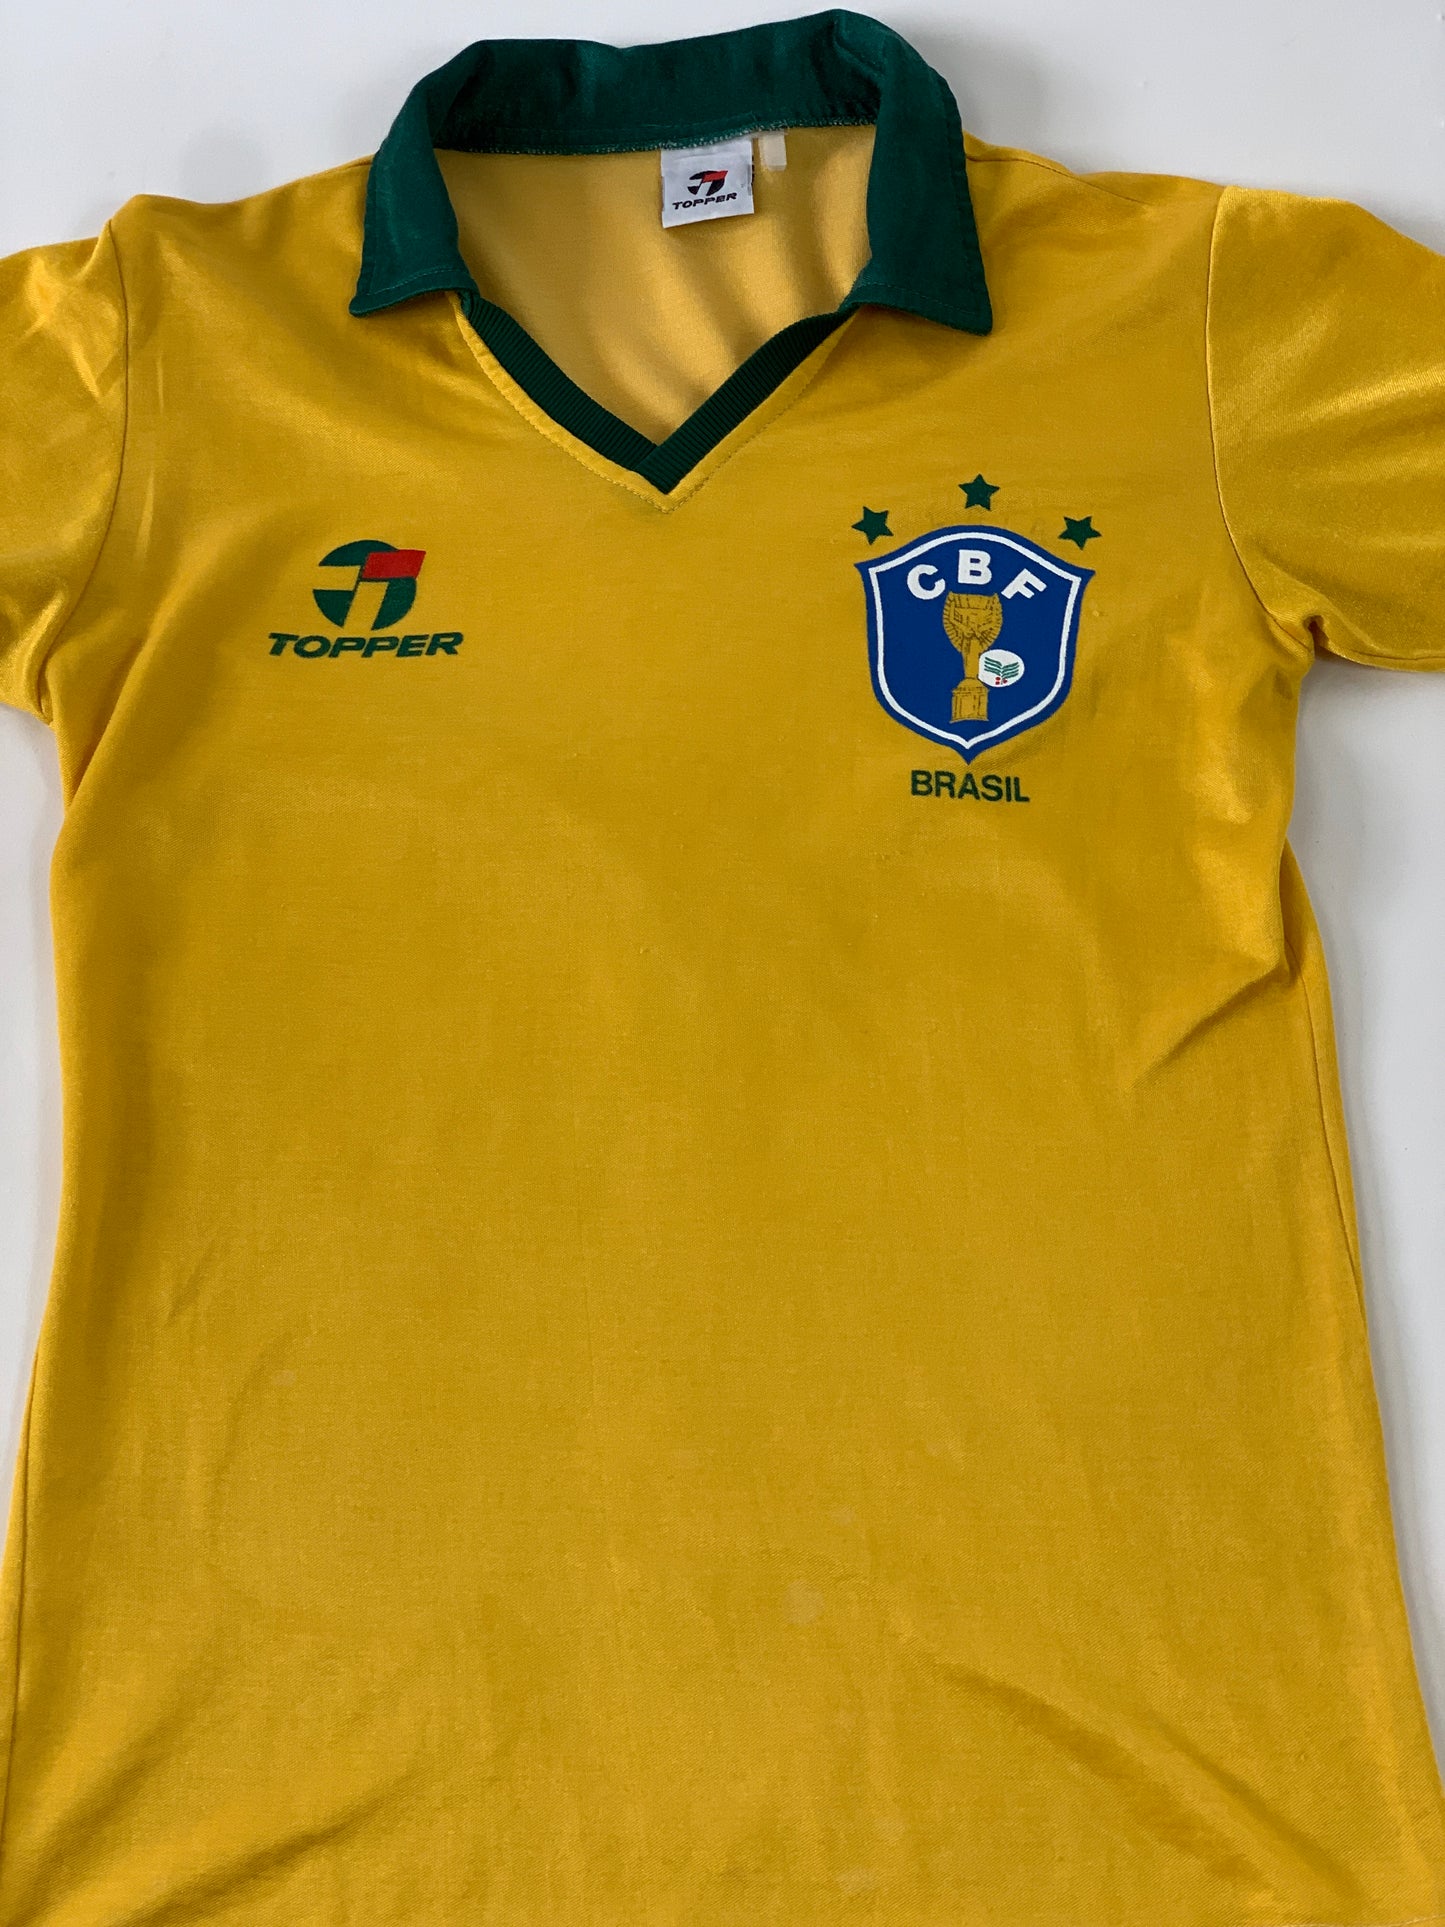 Topper 1985 Brasil Vintage Jersey - S